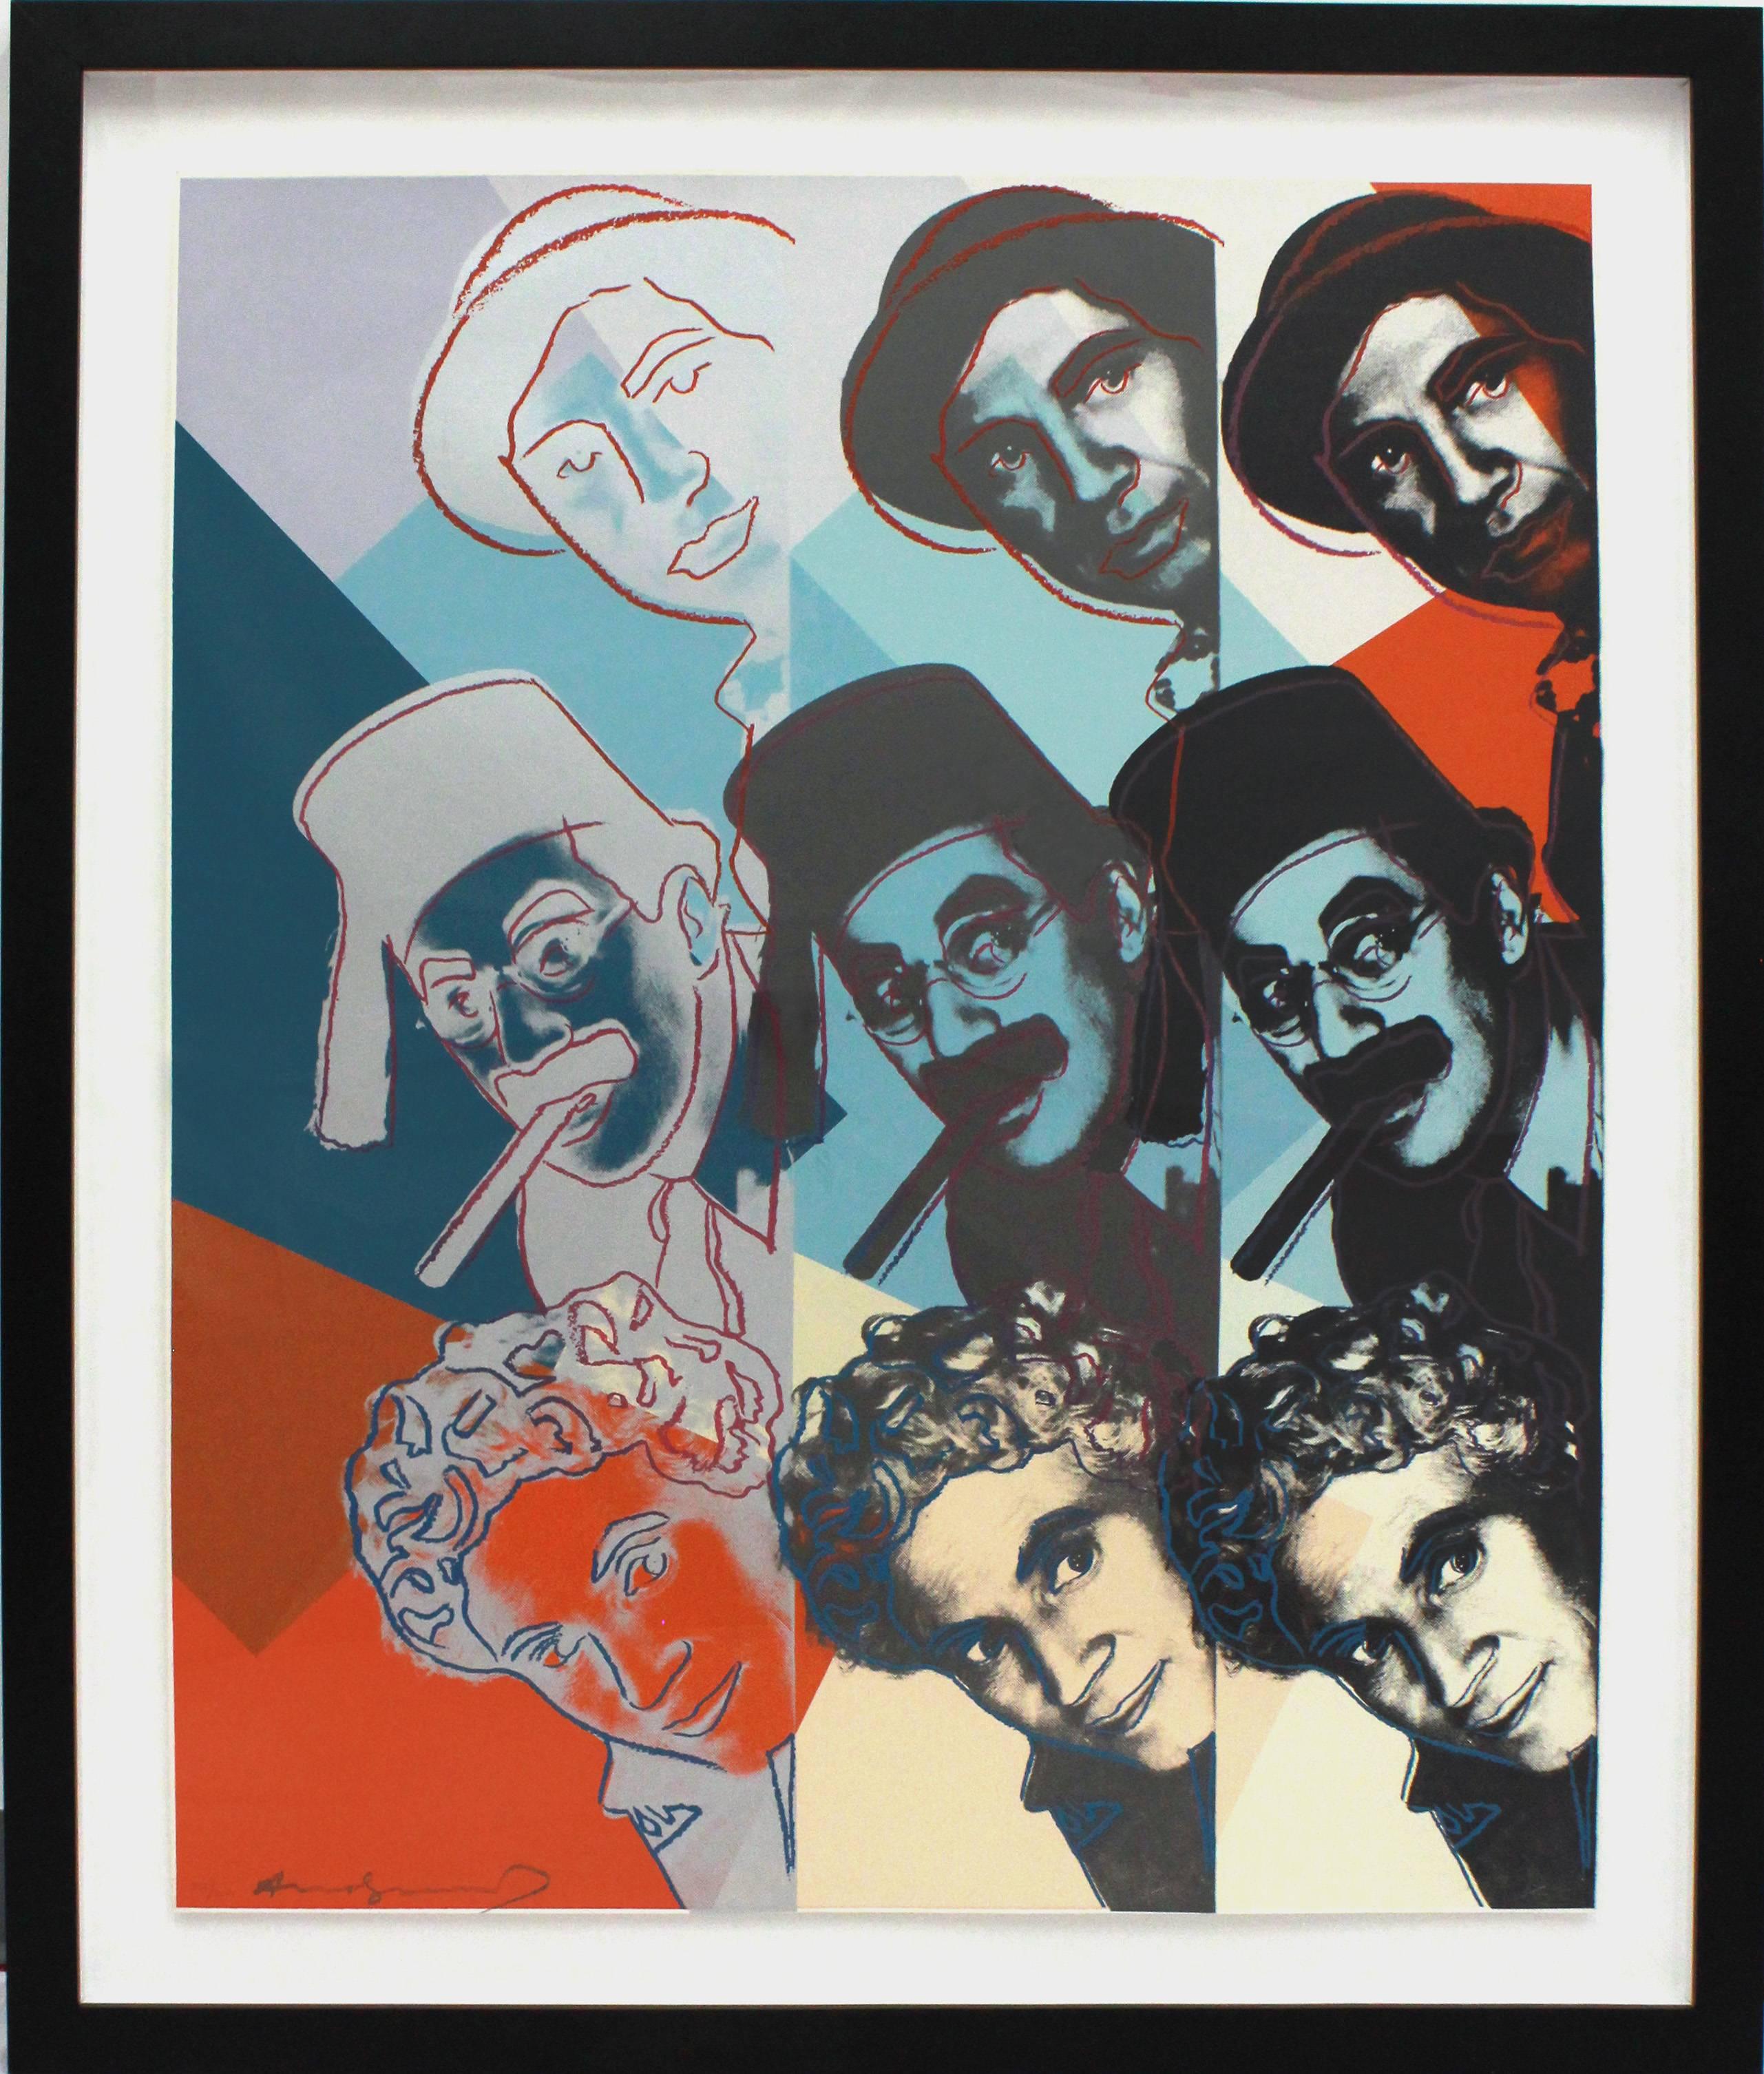 Marx Brothers (FS II.232)  - Print by Andy Warhol